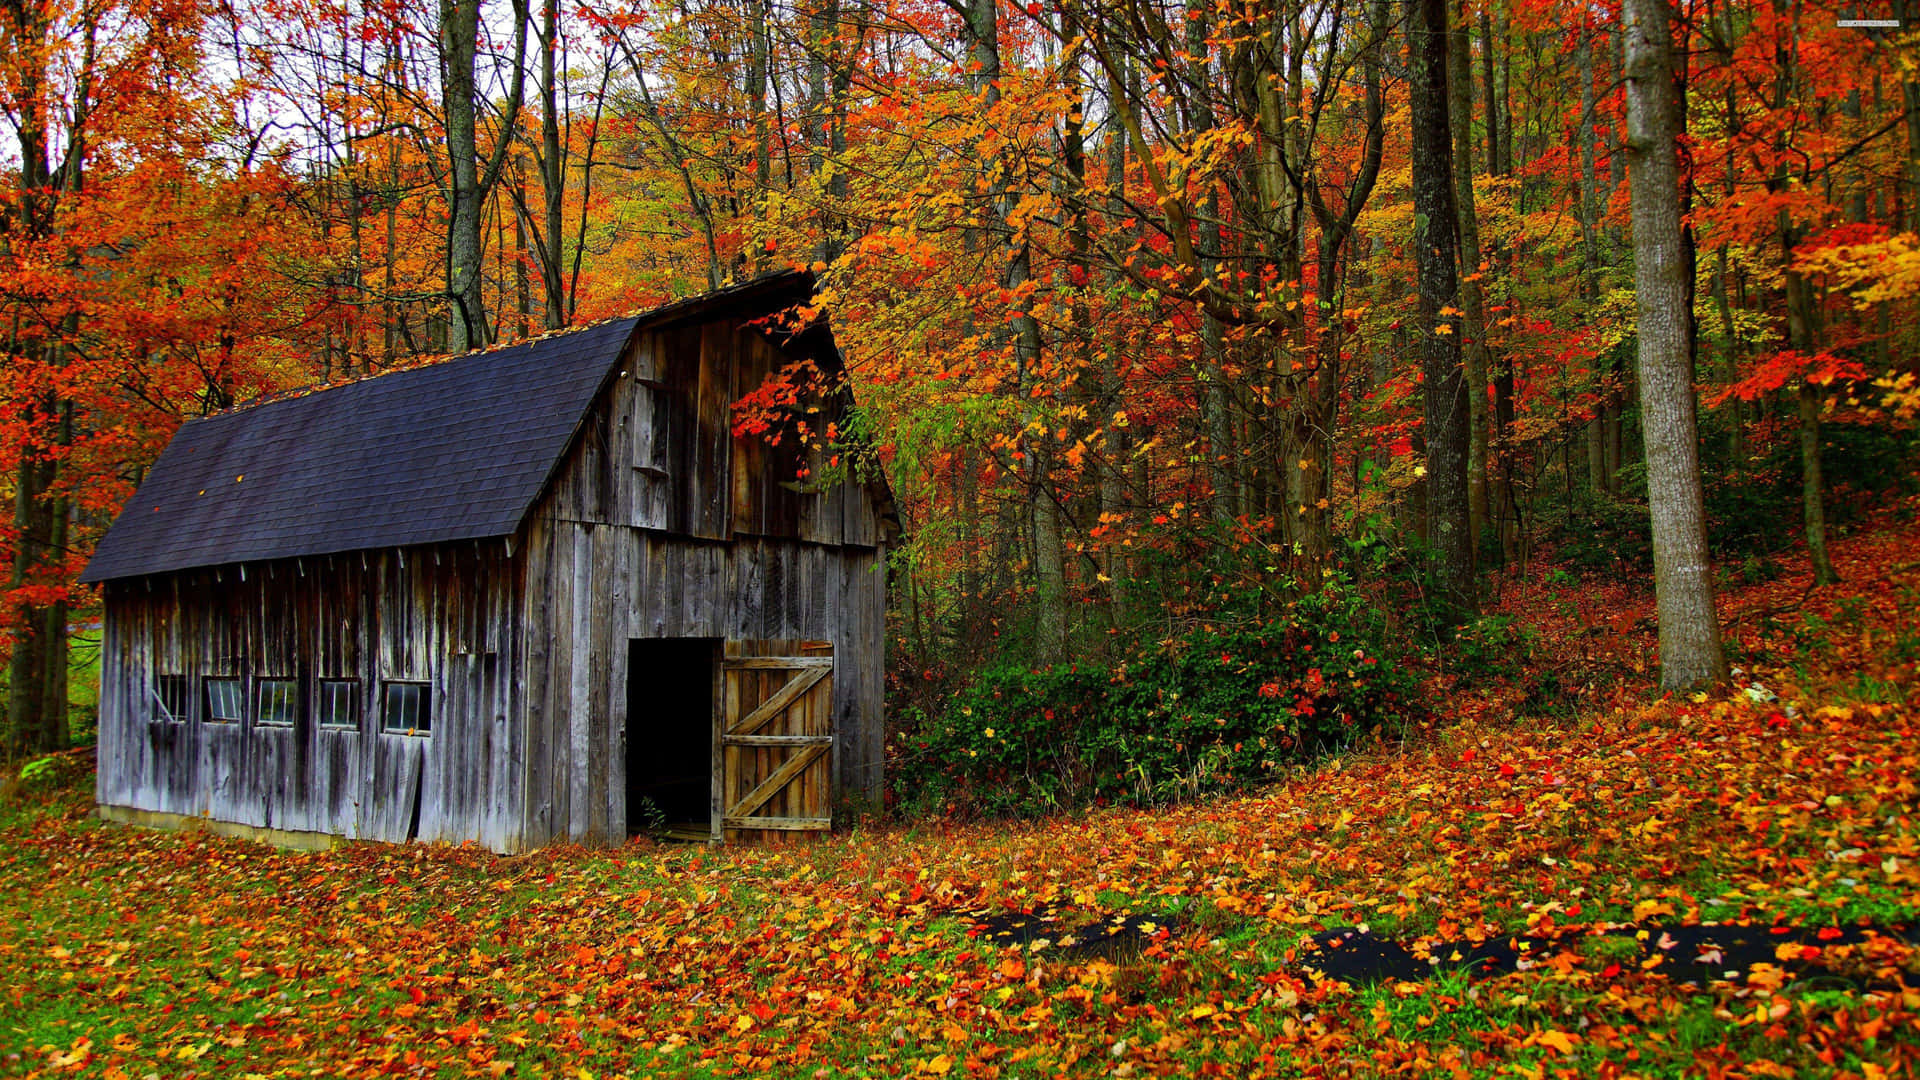 Rustic Barn in Autumn Scenery Wallpaper